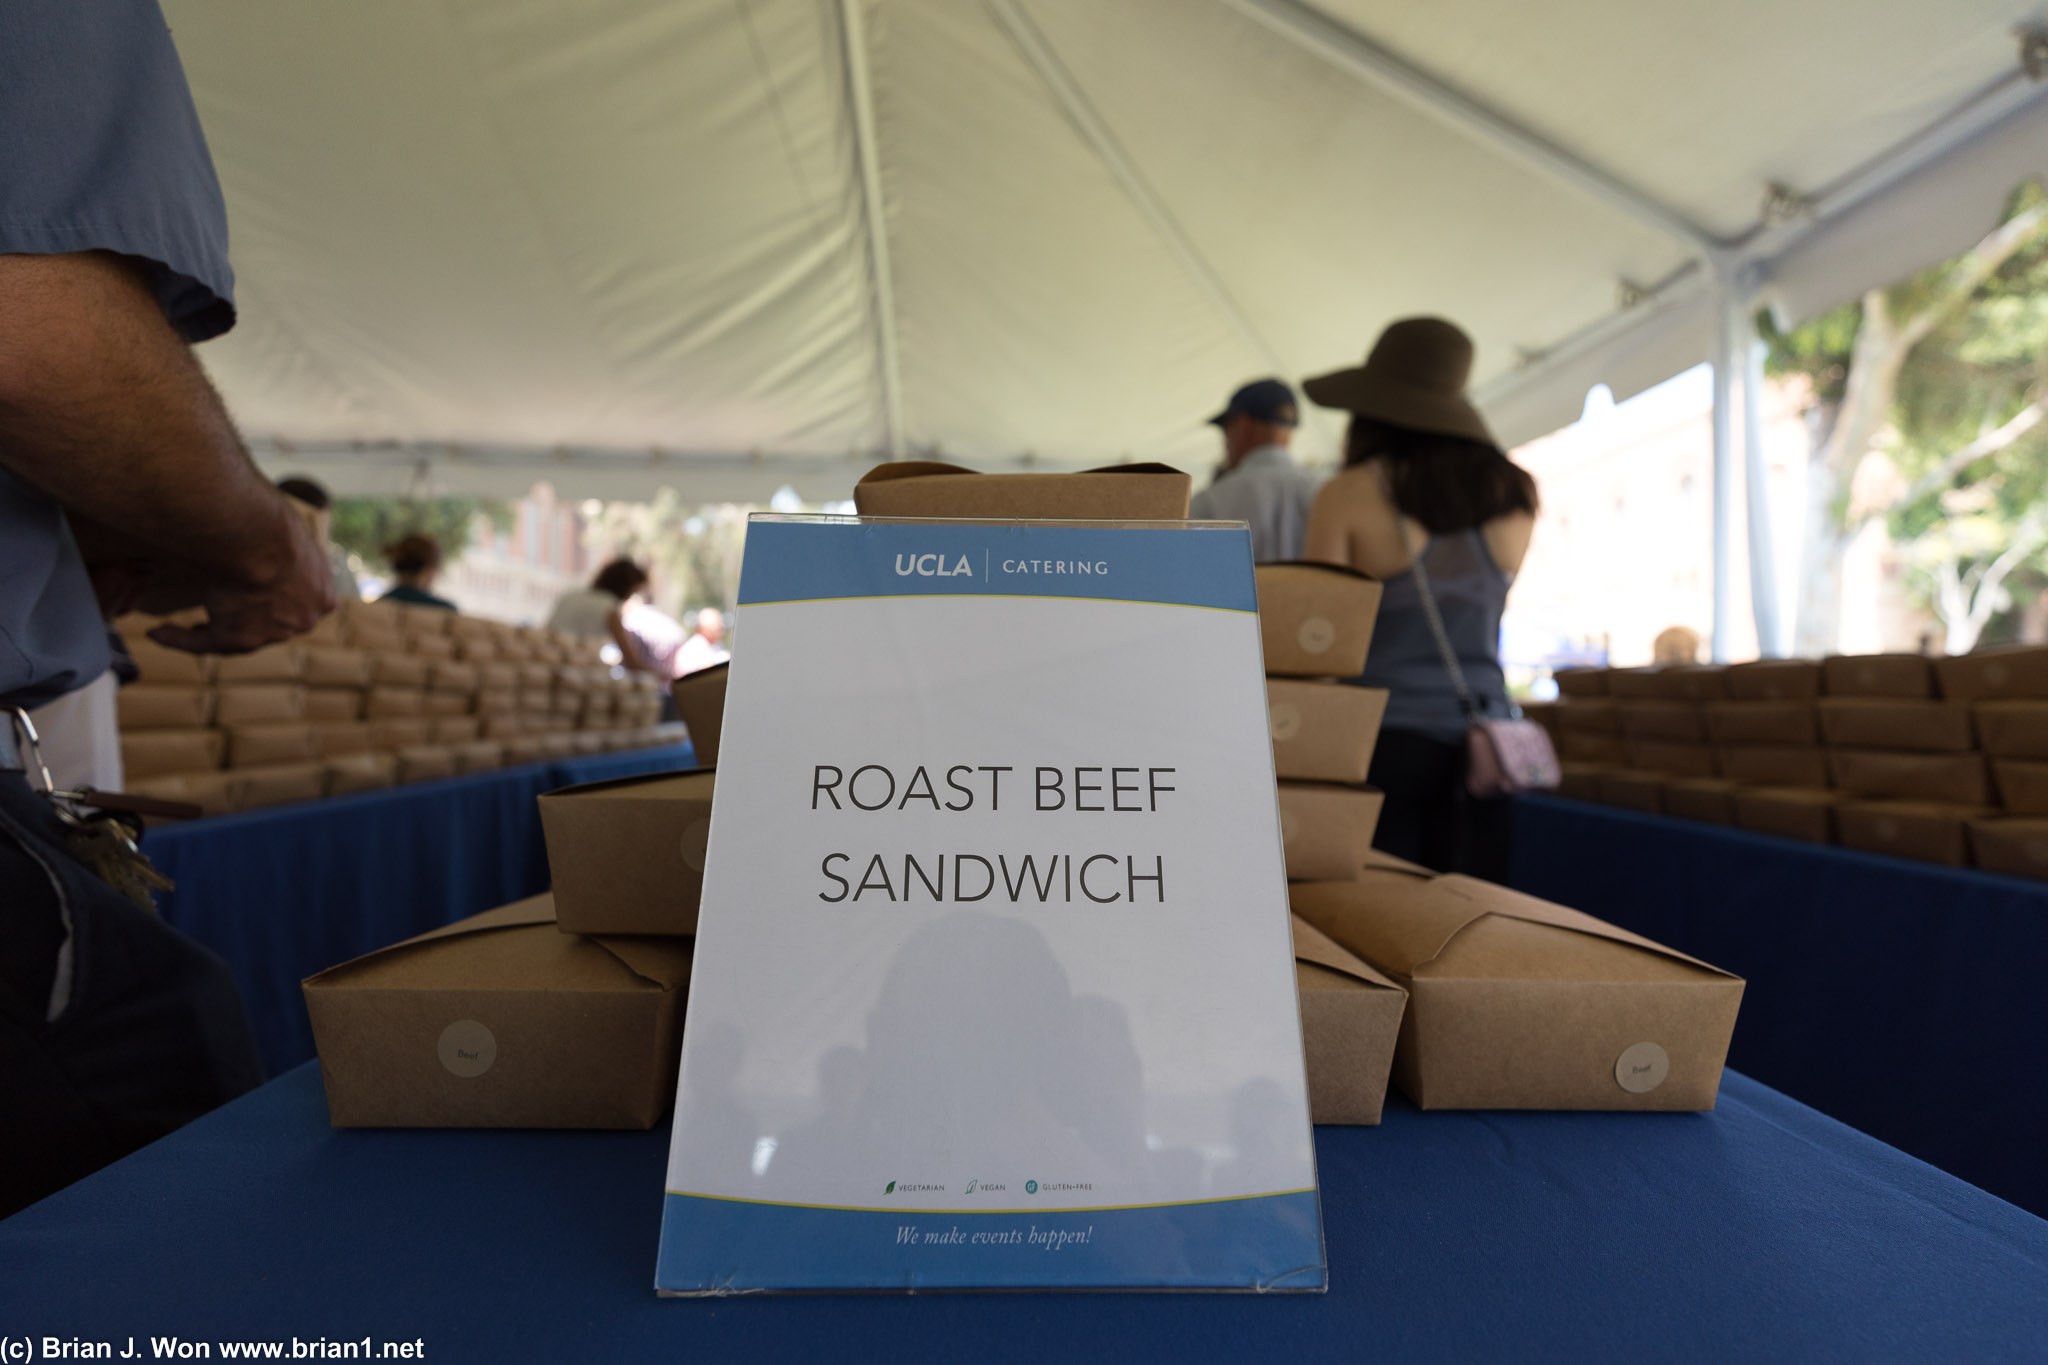 Roast beef sandwiches here.